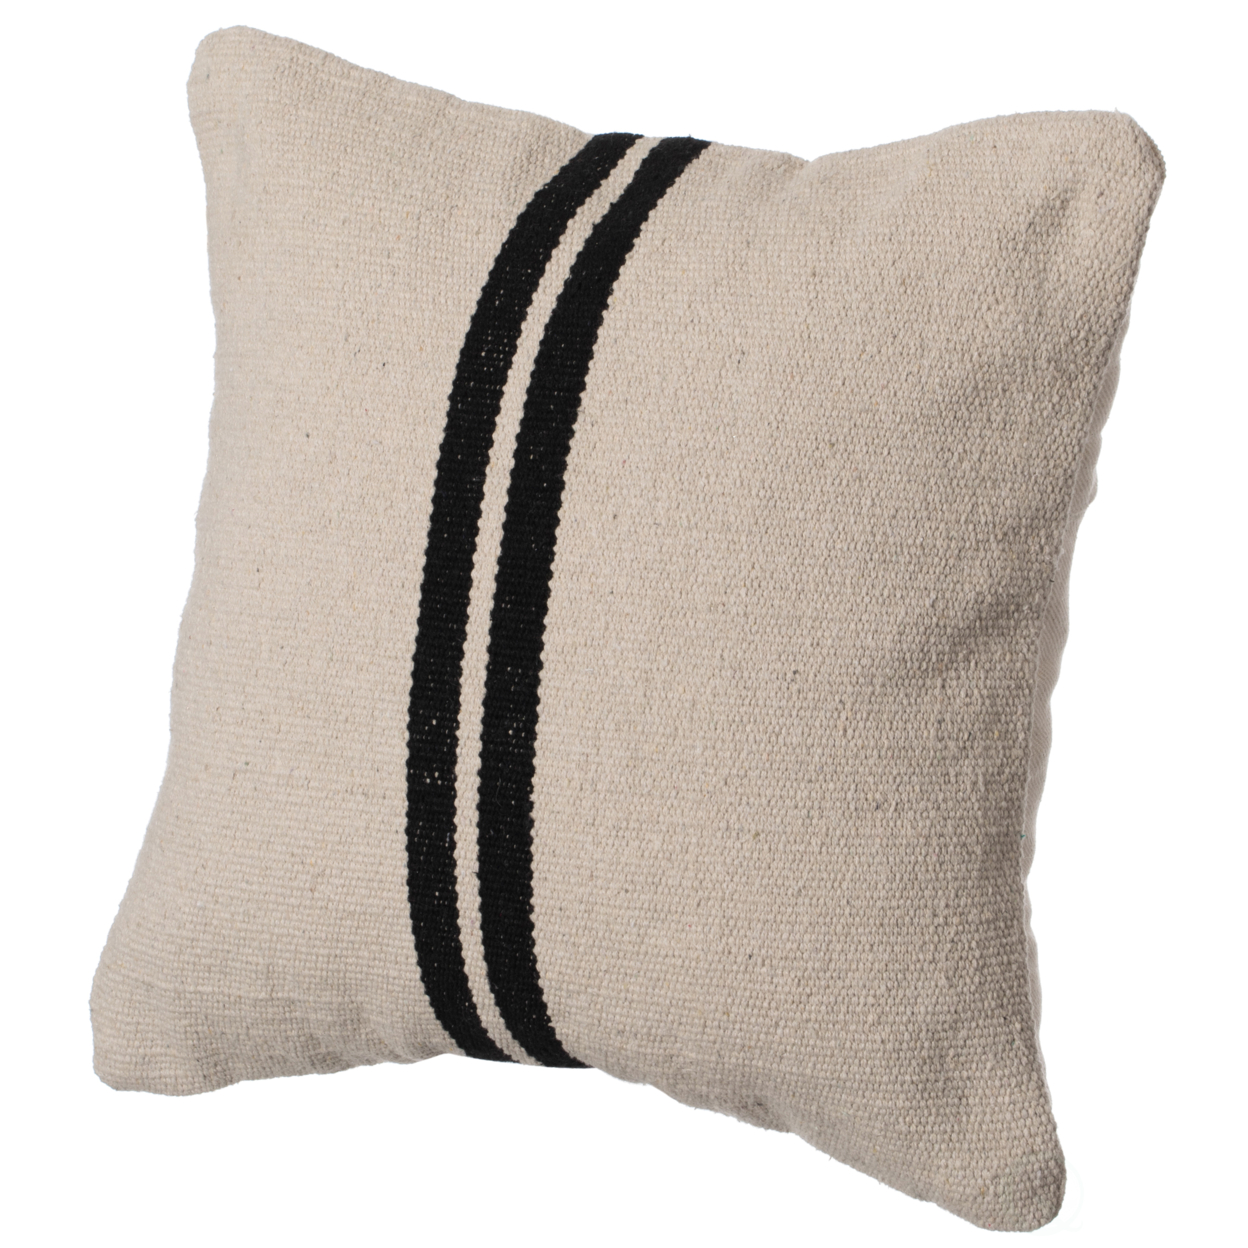 16 Handwoven Cotton Throw Pillow Cover Flat Natural Design - Stripes